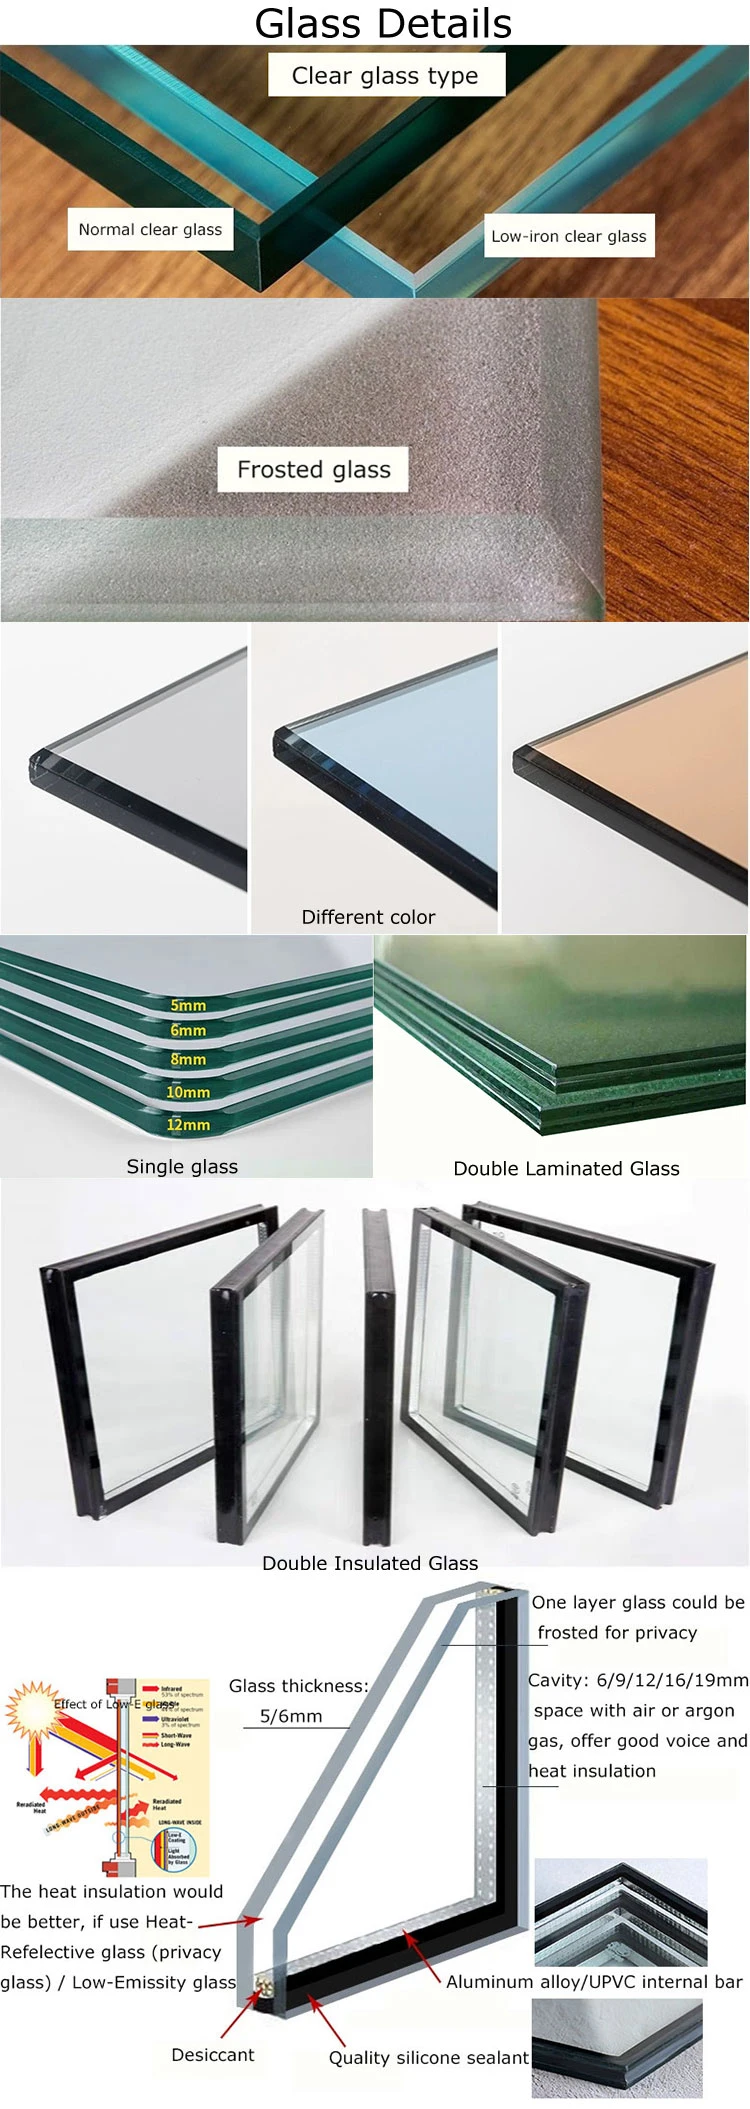 High Quality Black Aluminum Alloy Bi-Folding Window Folding Window for Project